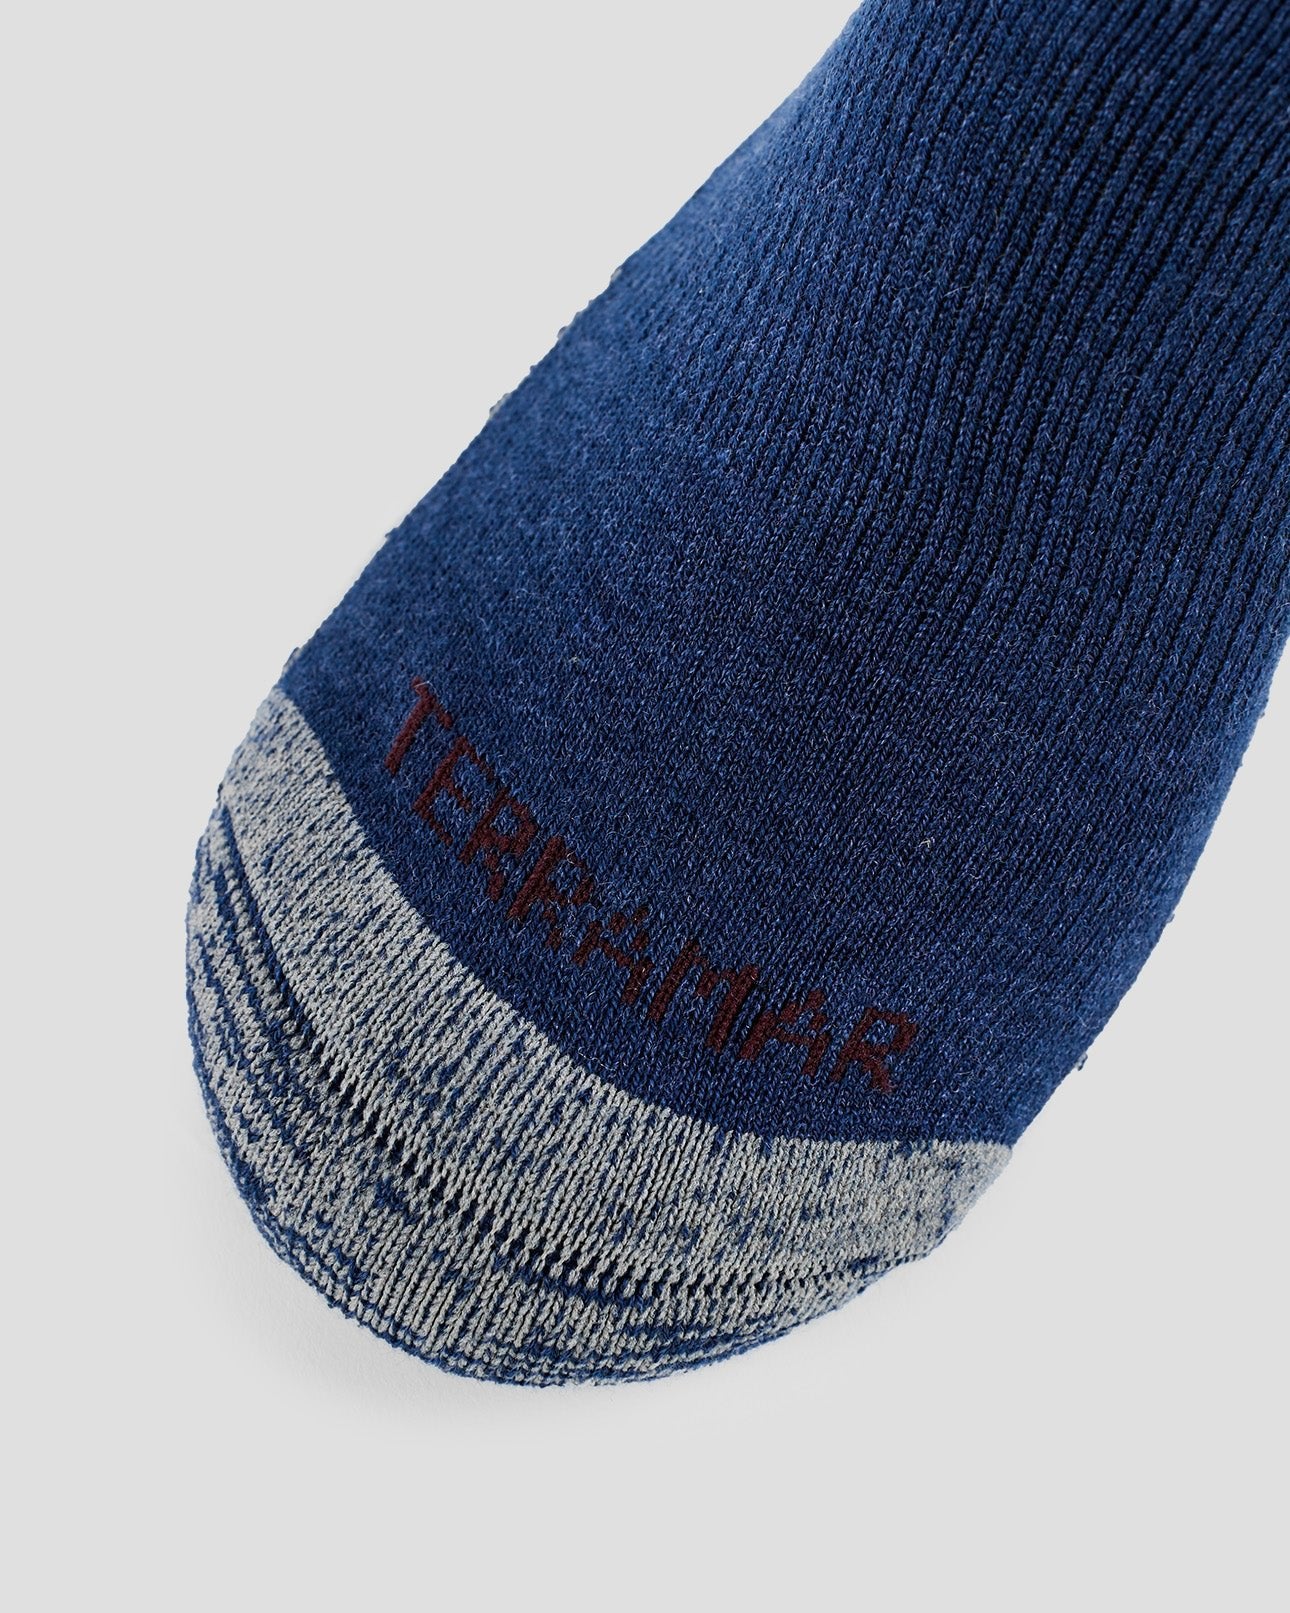 2PK ATP Merino Hiker Sock | Color: Grey/Navy